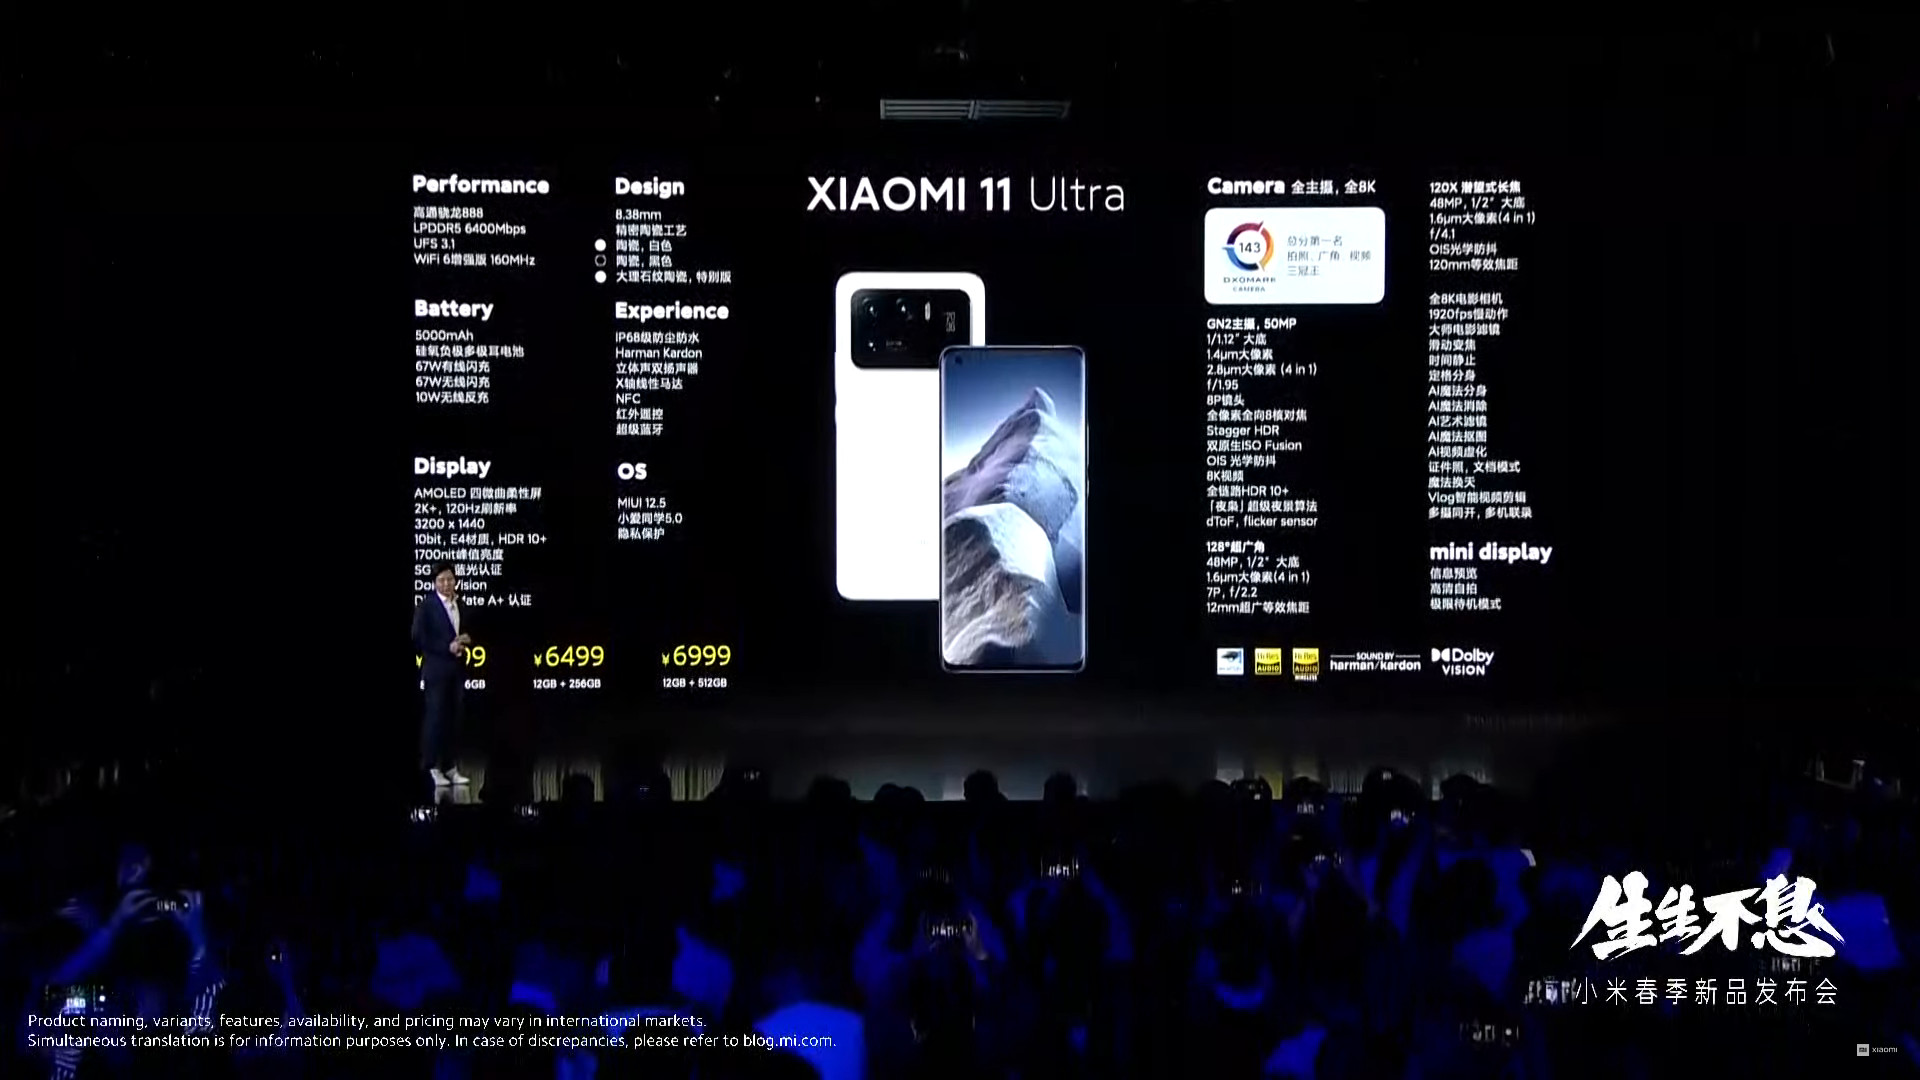 Xiaomi Mi 11 Ultra 120x Zoom